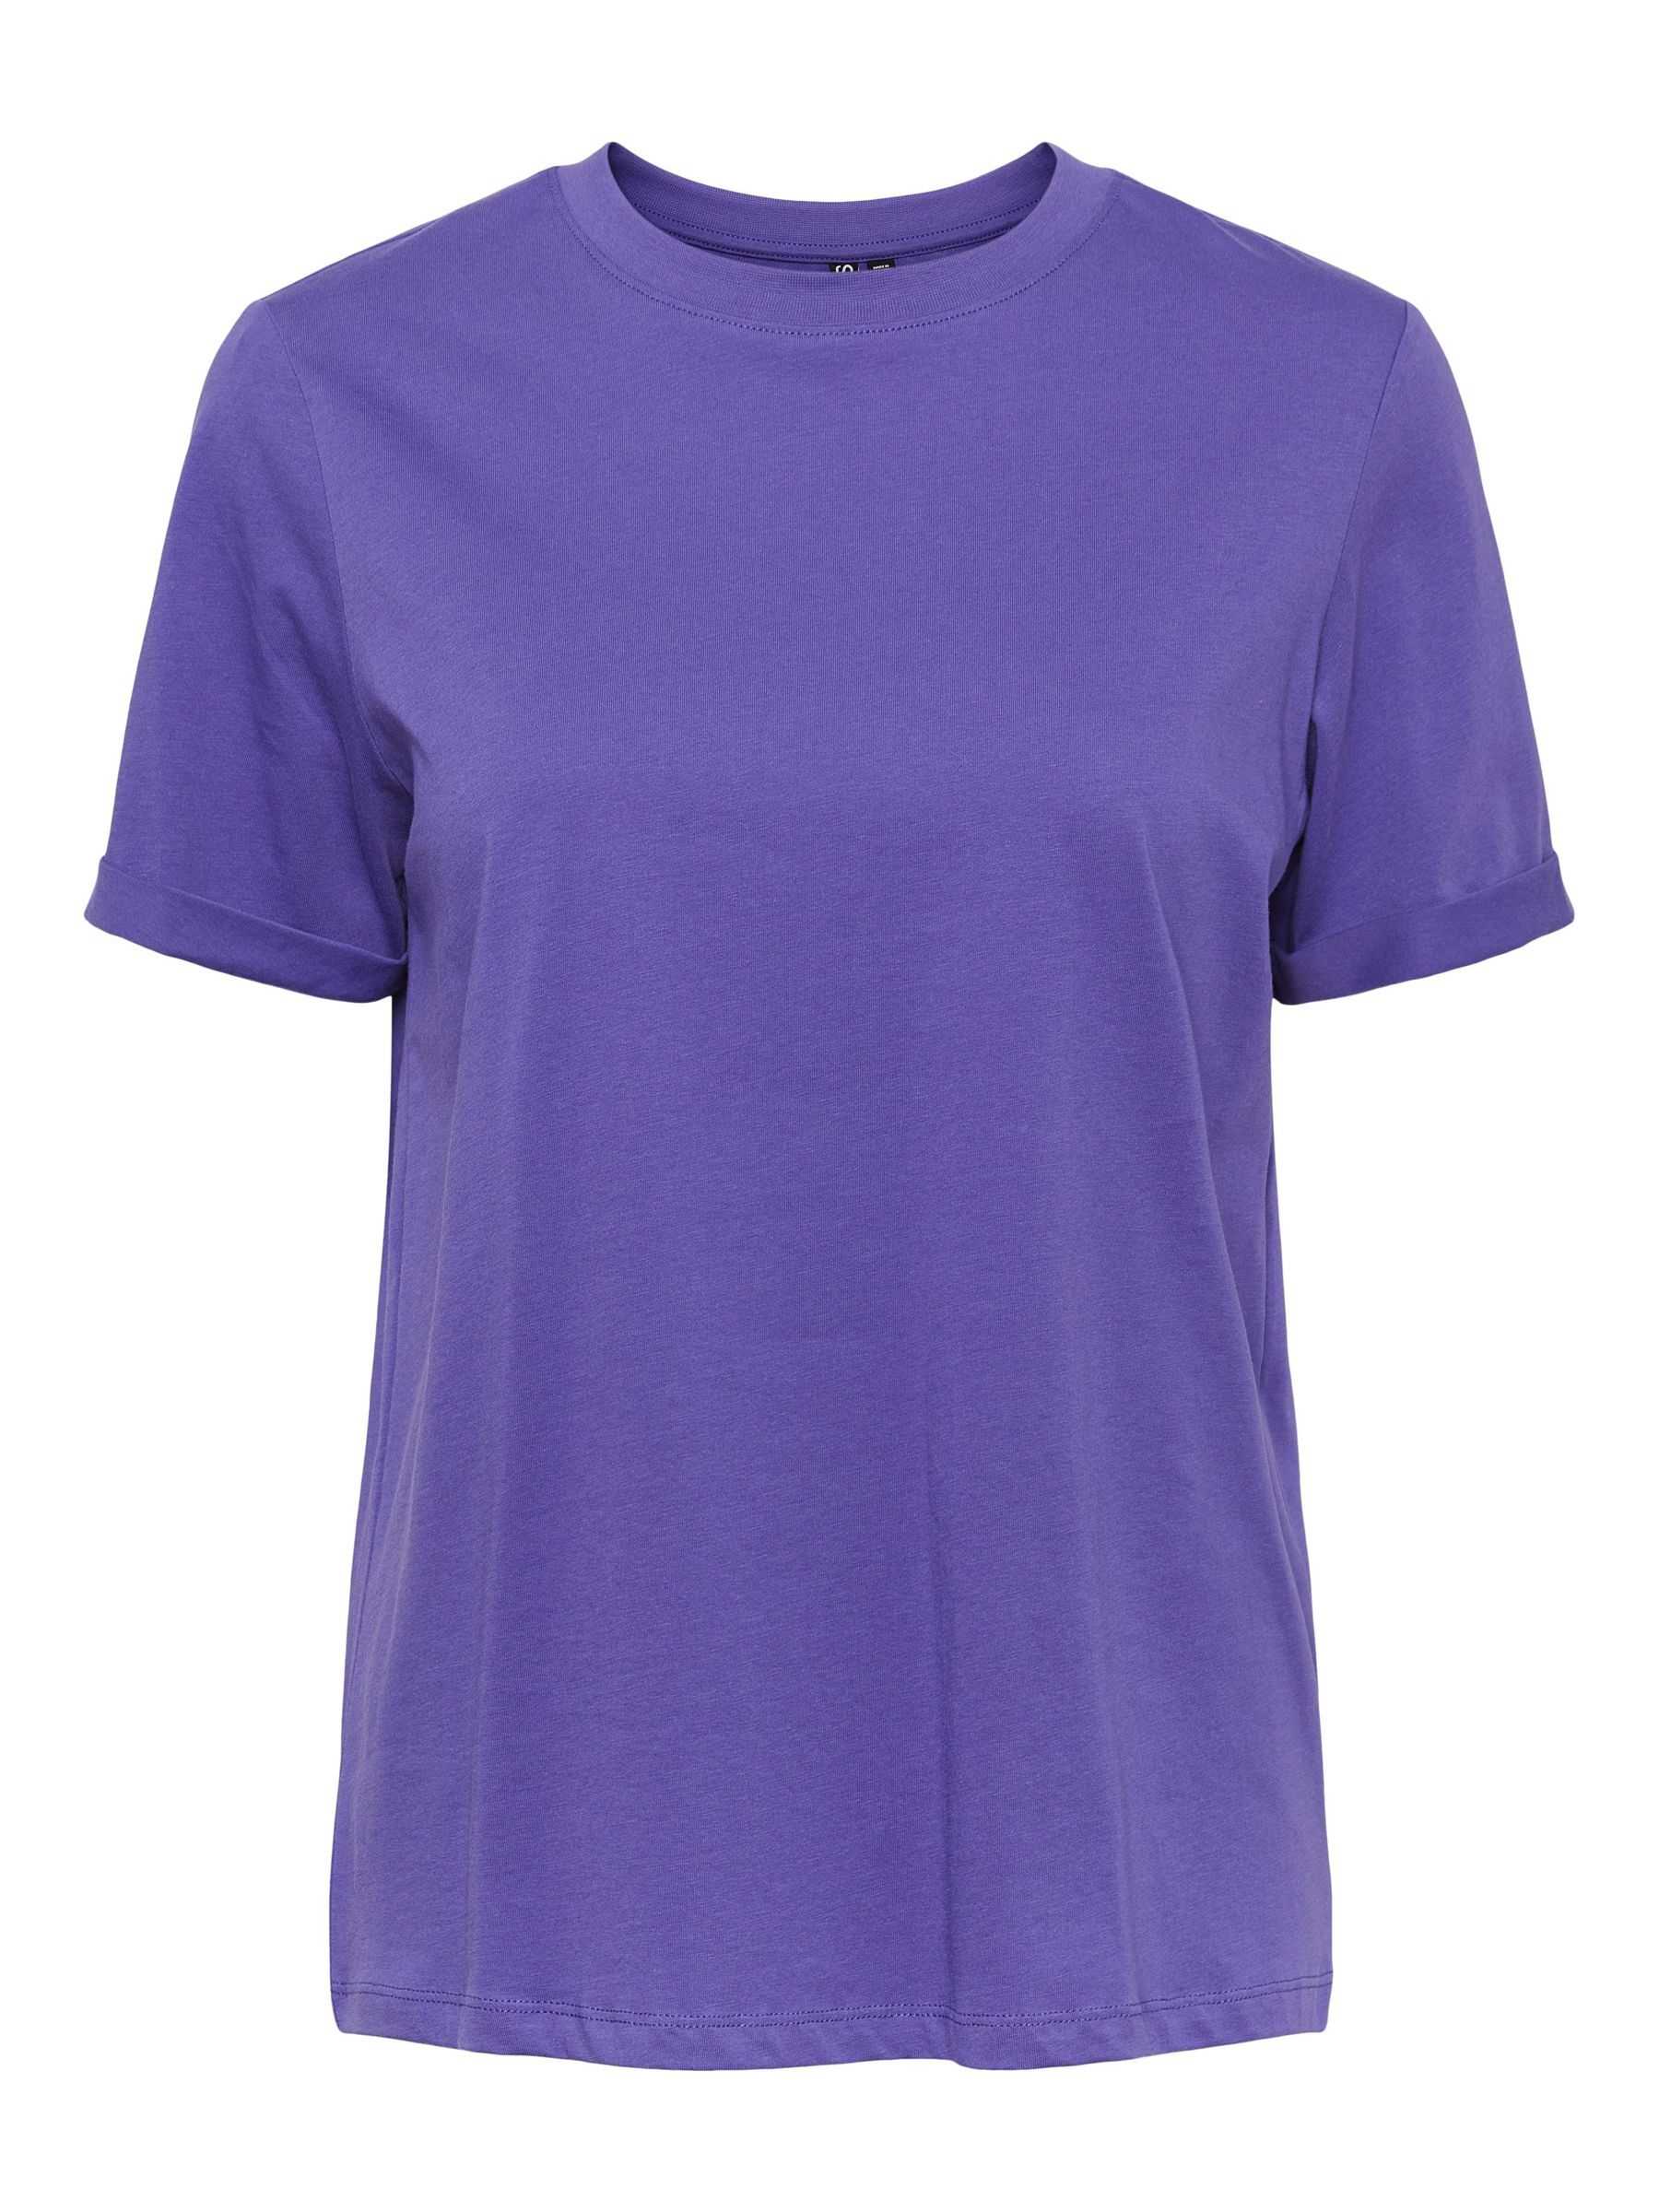 NoName blouse Navy Blue/White S WOMEN FASHION Shirts & T-shirts Print discount 66% 